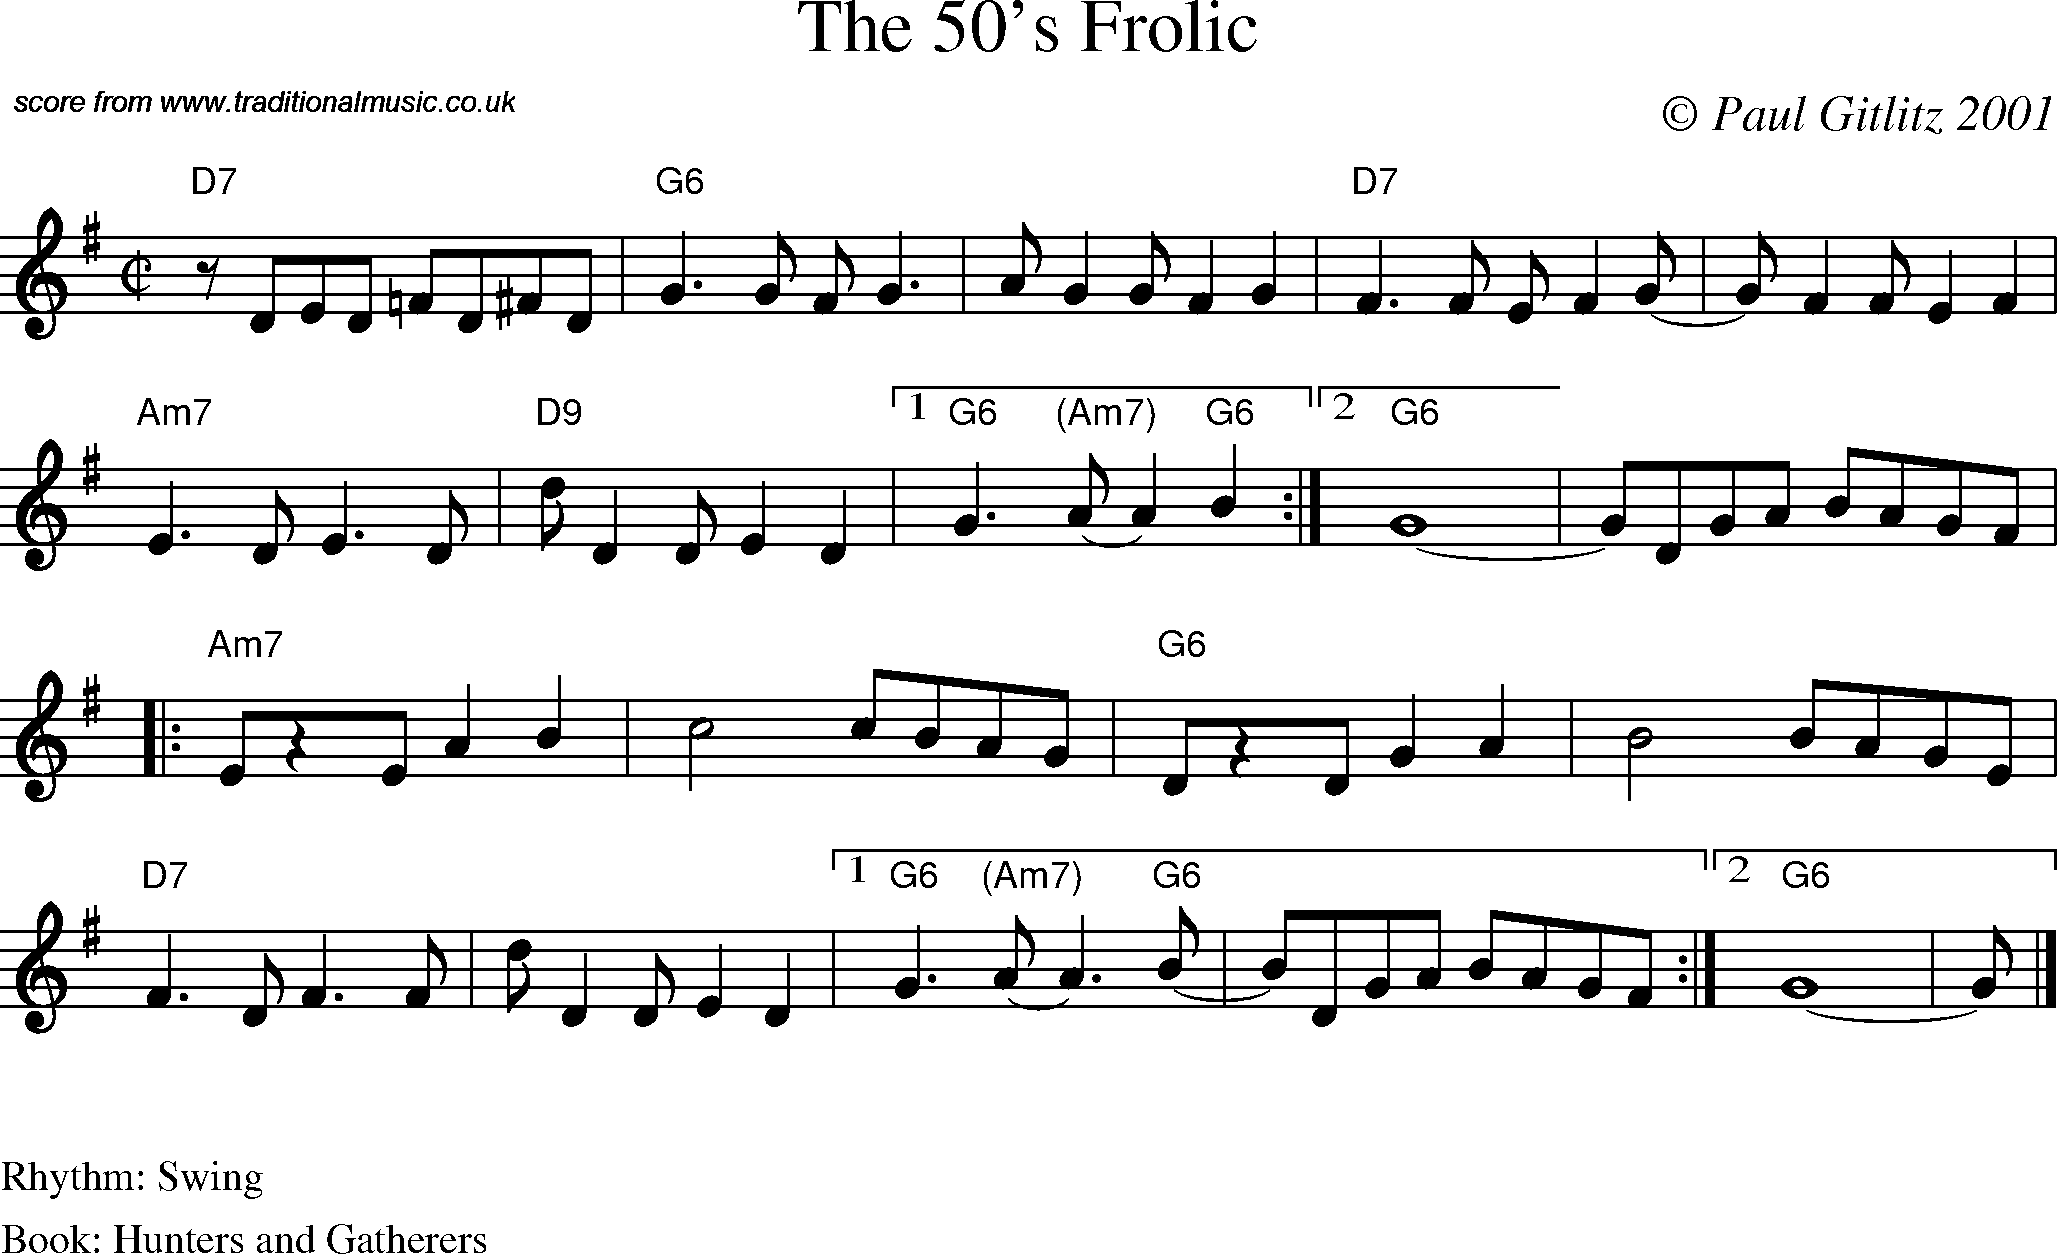 Sheet Music Score for Swing - The 50's Frolic